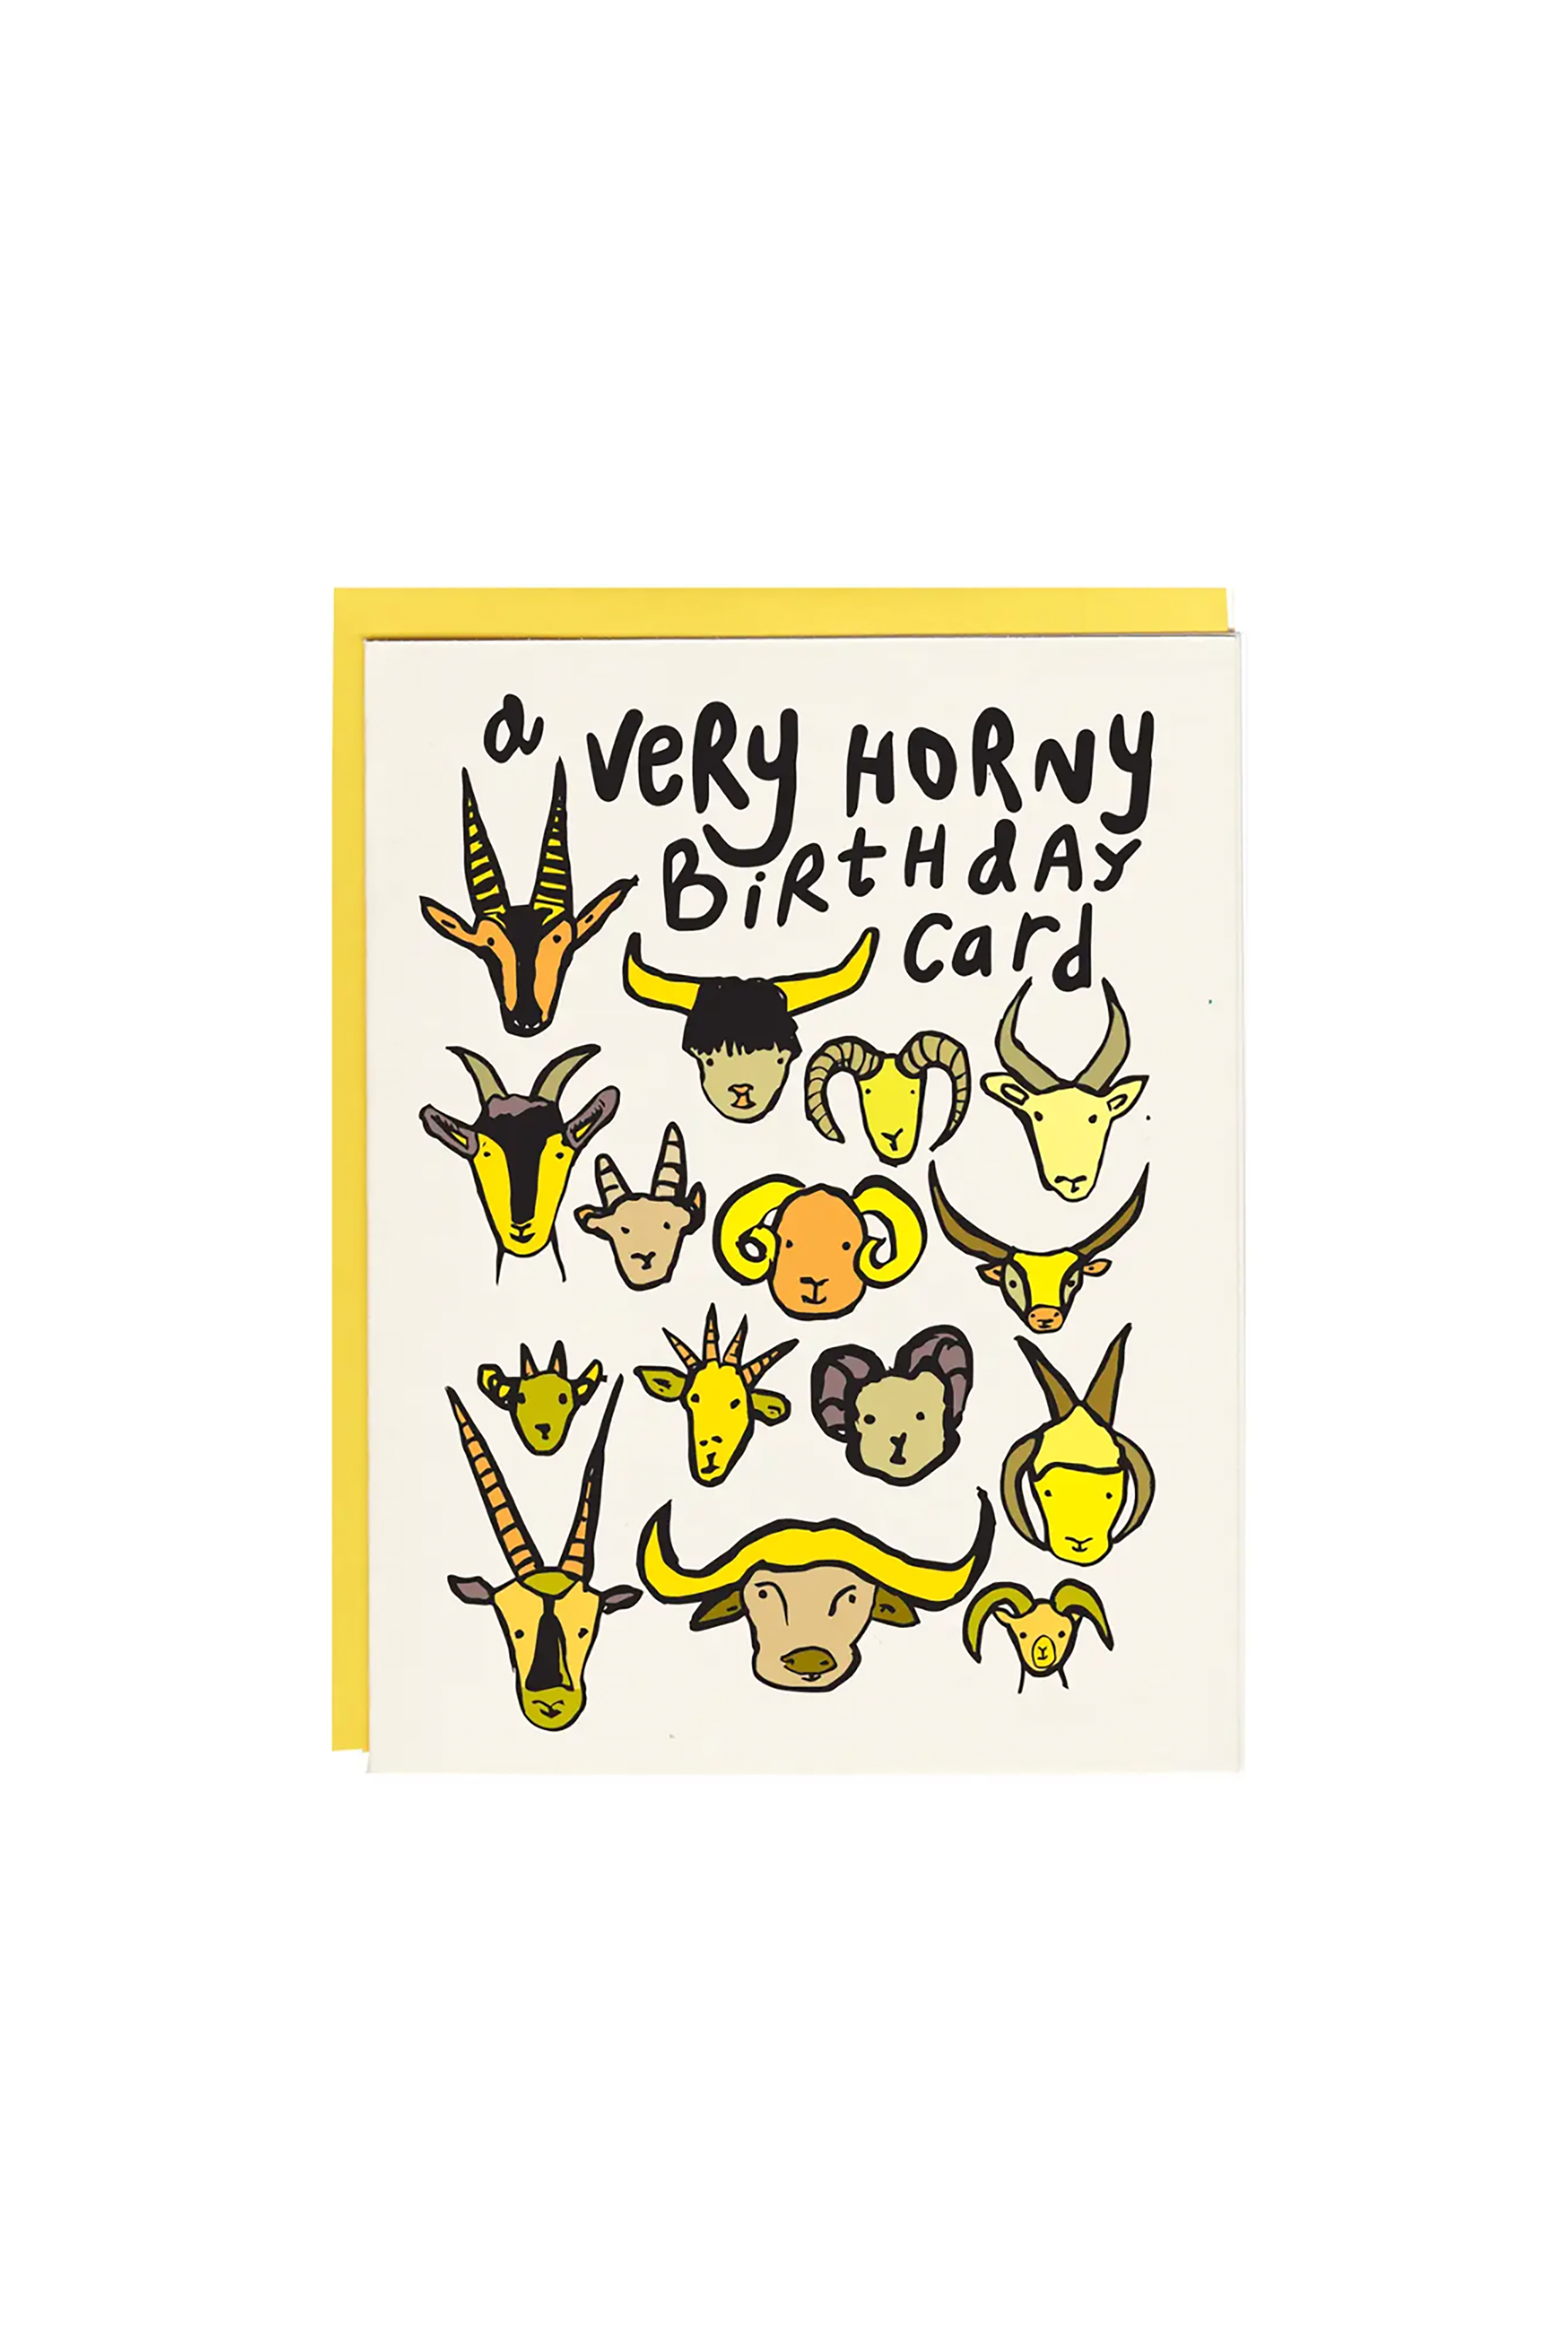 A Really Horny Birthday Card